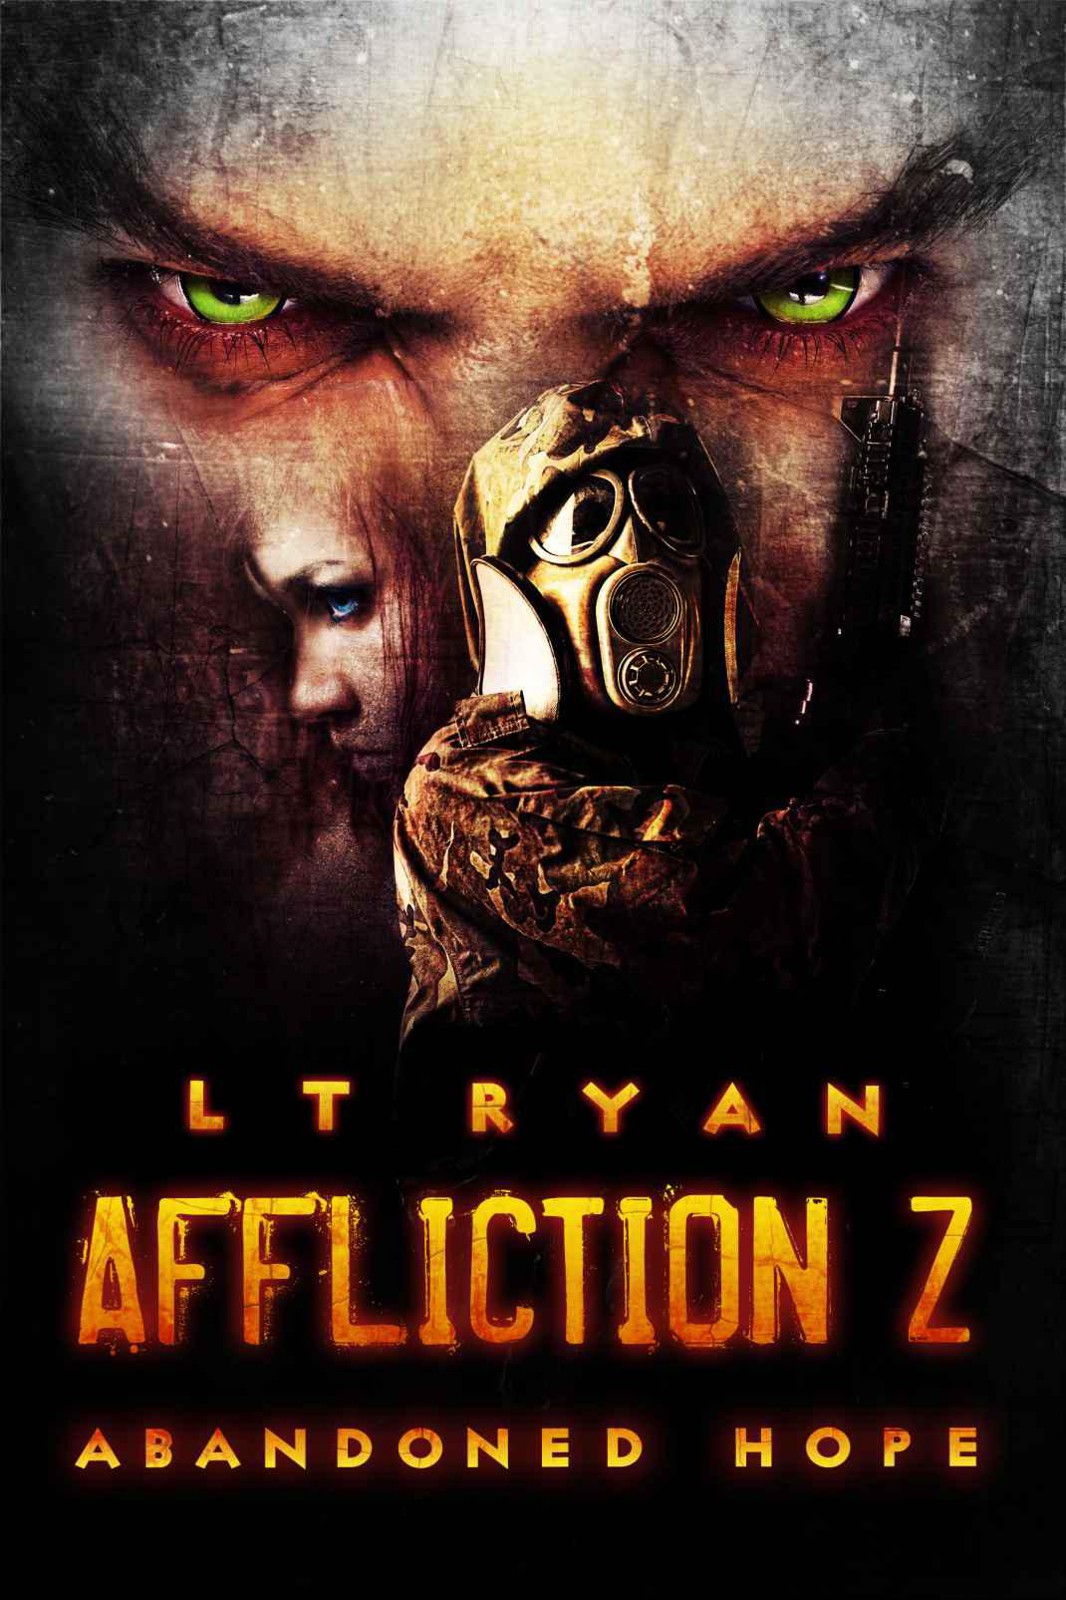 Affliction Z: Abandoned Hope